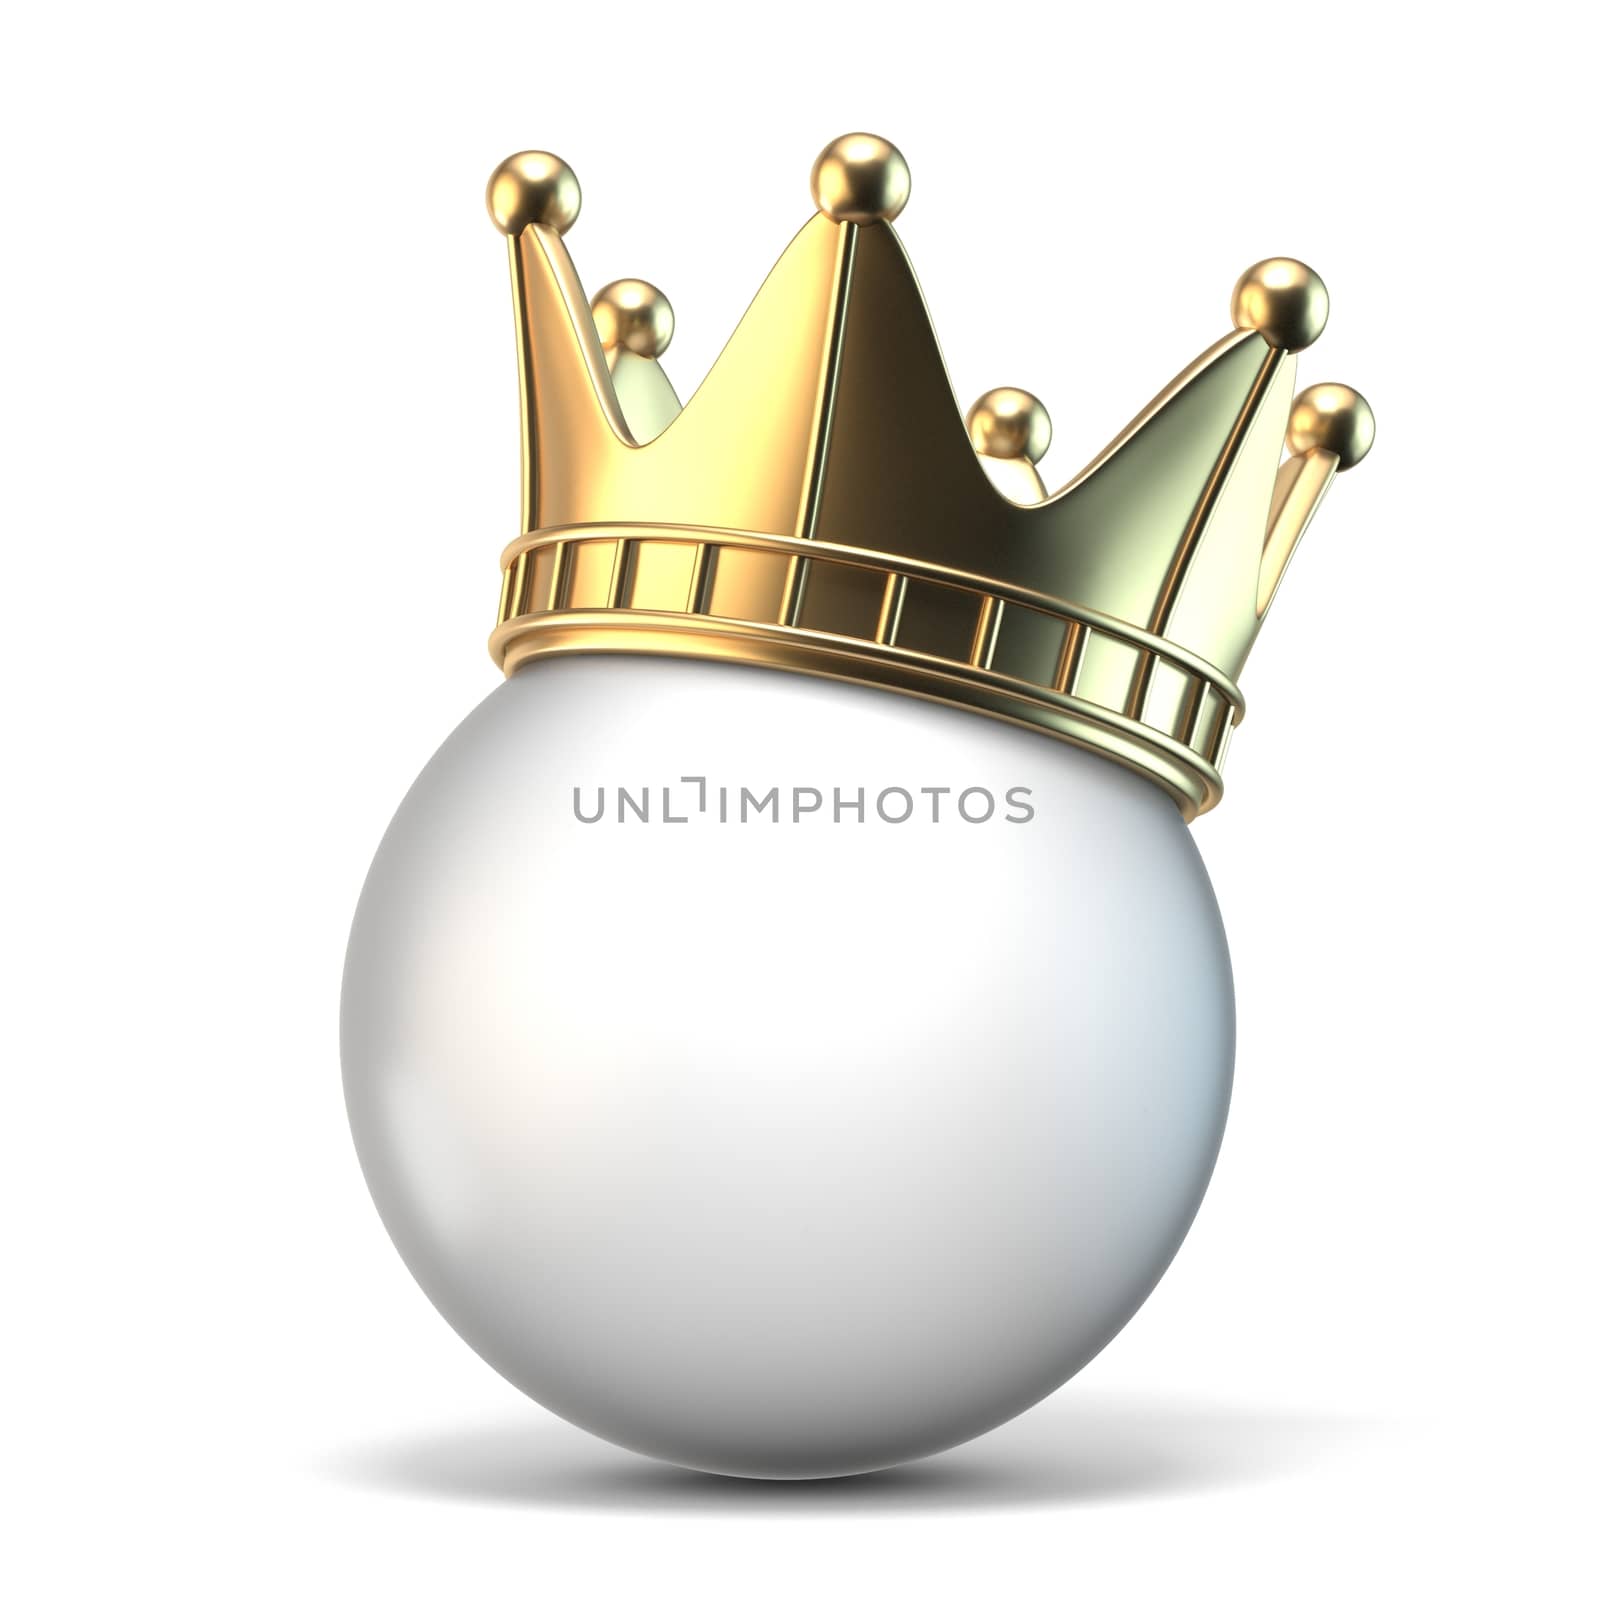 Golden crown on white ball 3D render illustration isolated on white background